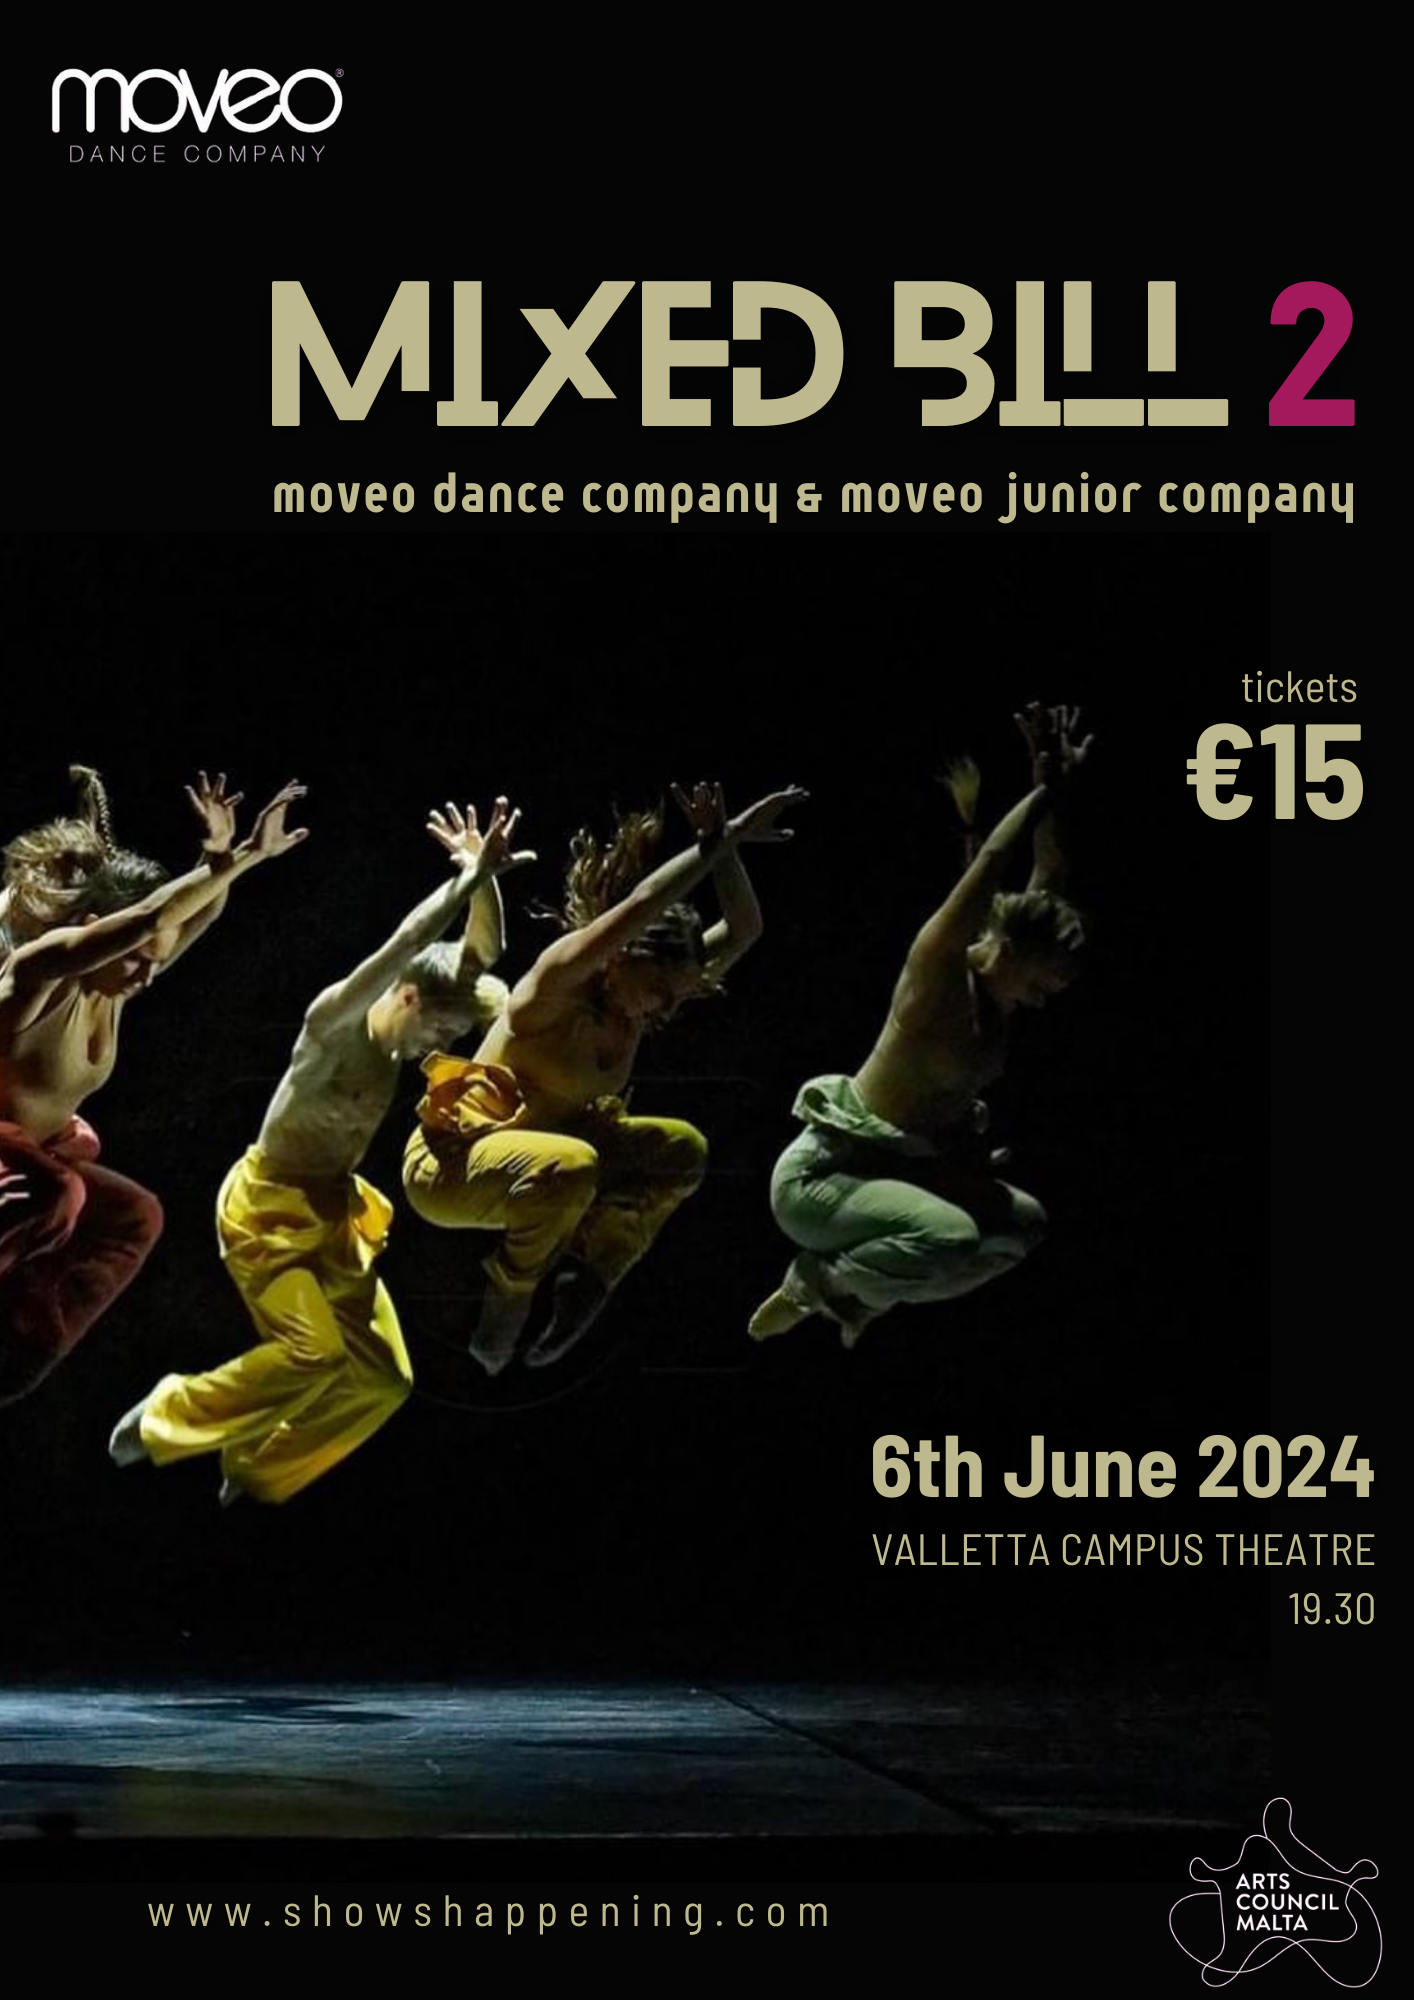 Mixed Bill 2 by Moveo Dance Company